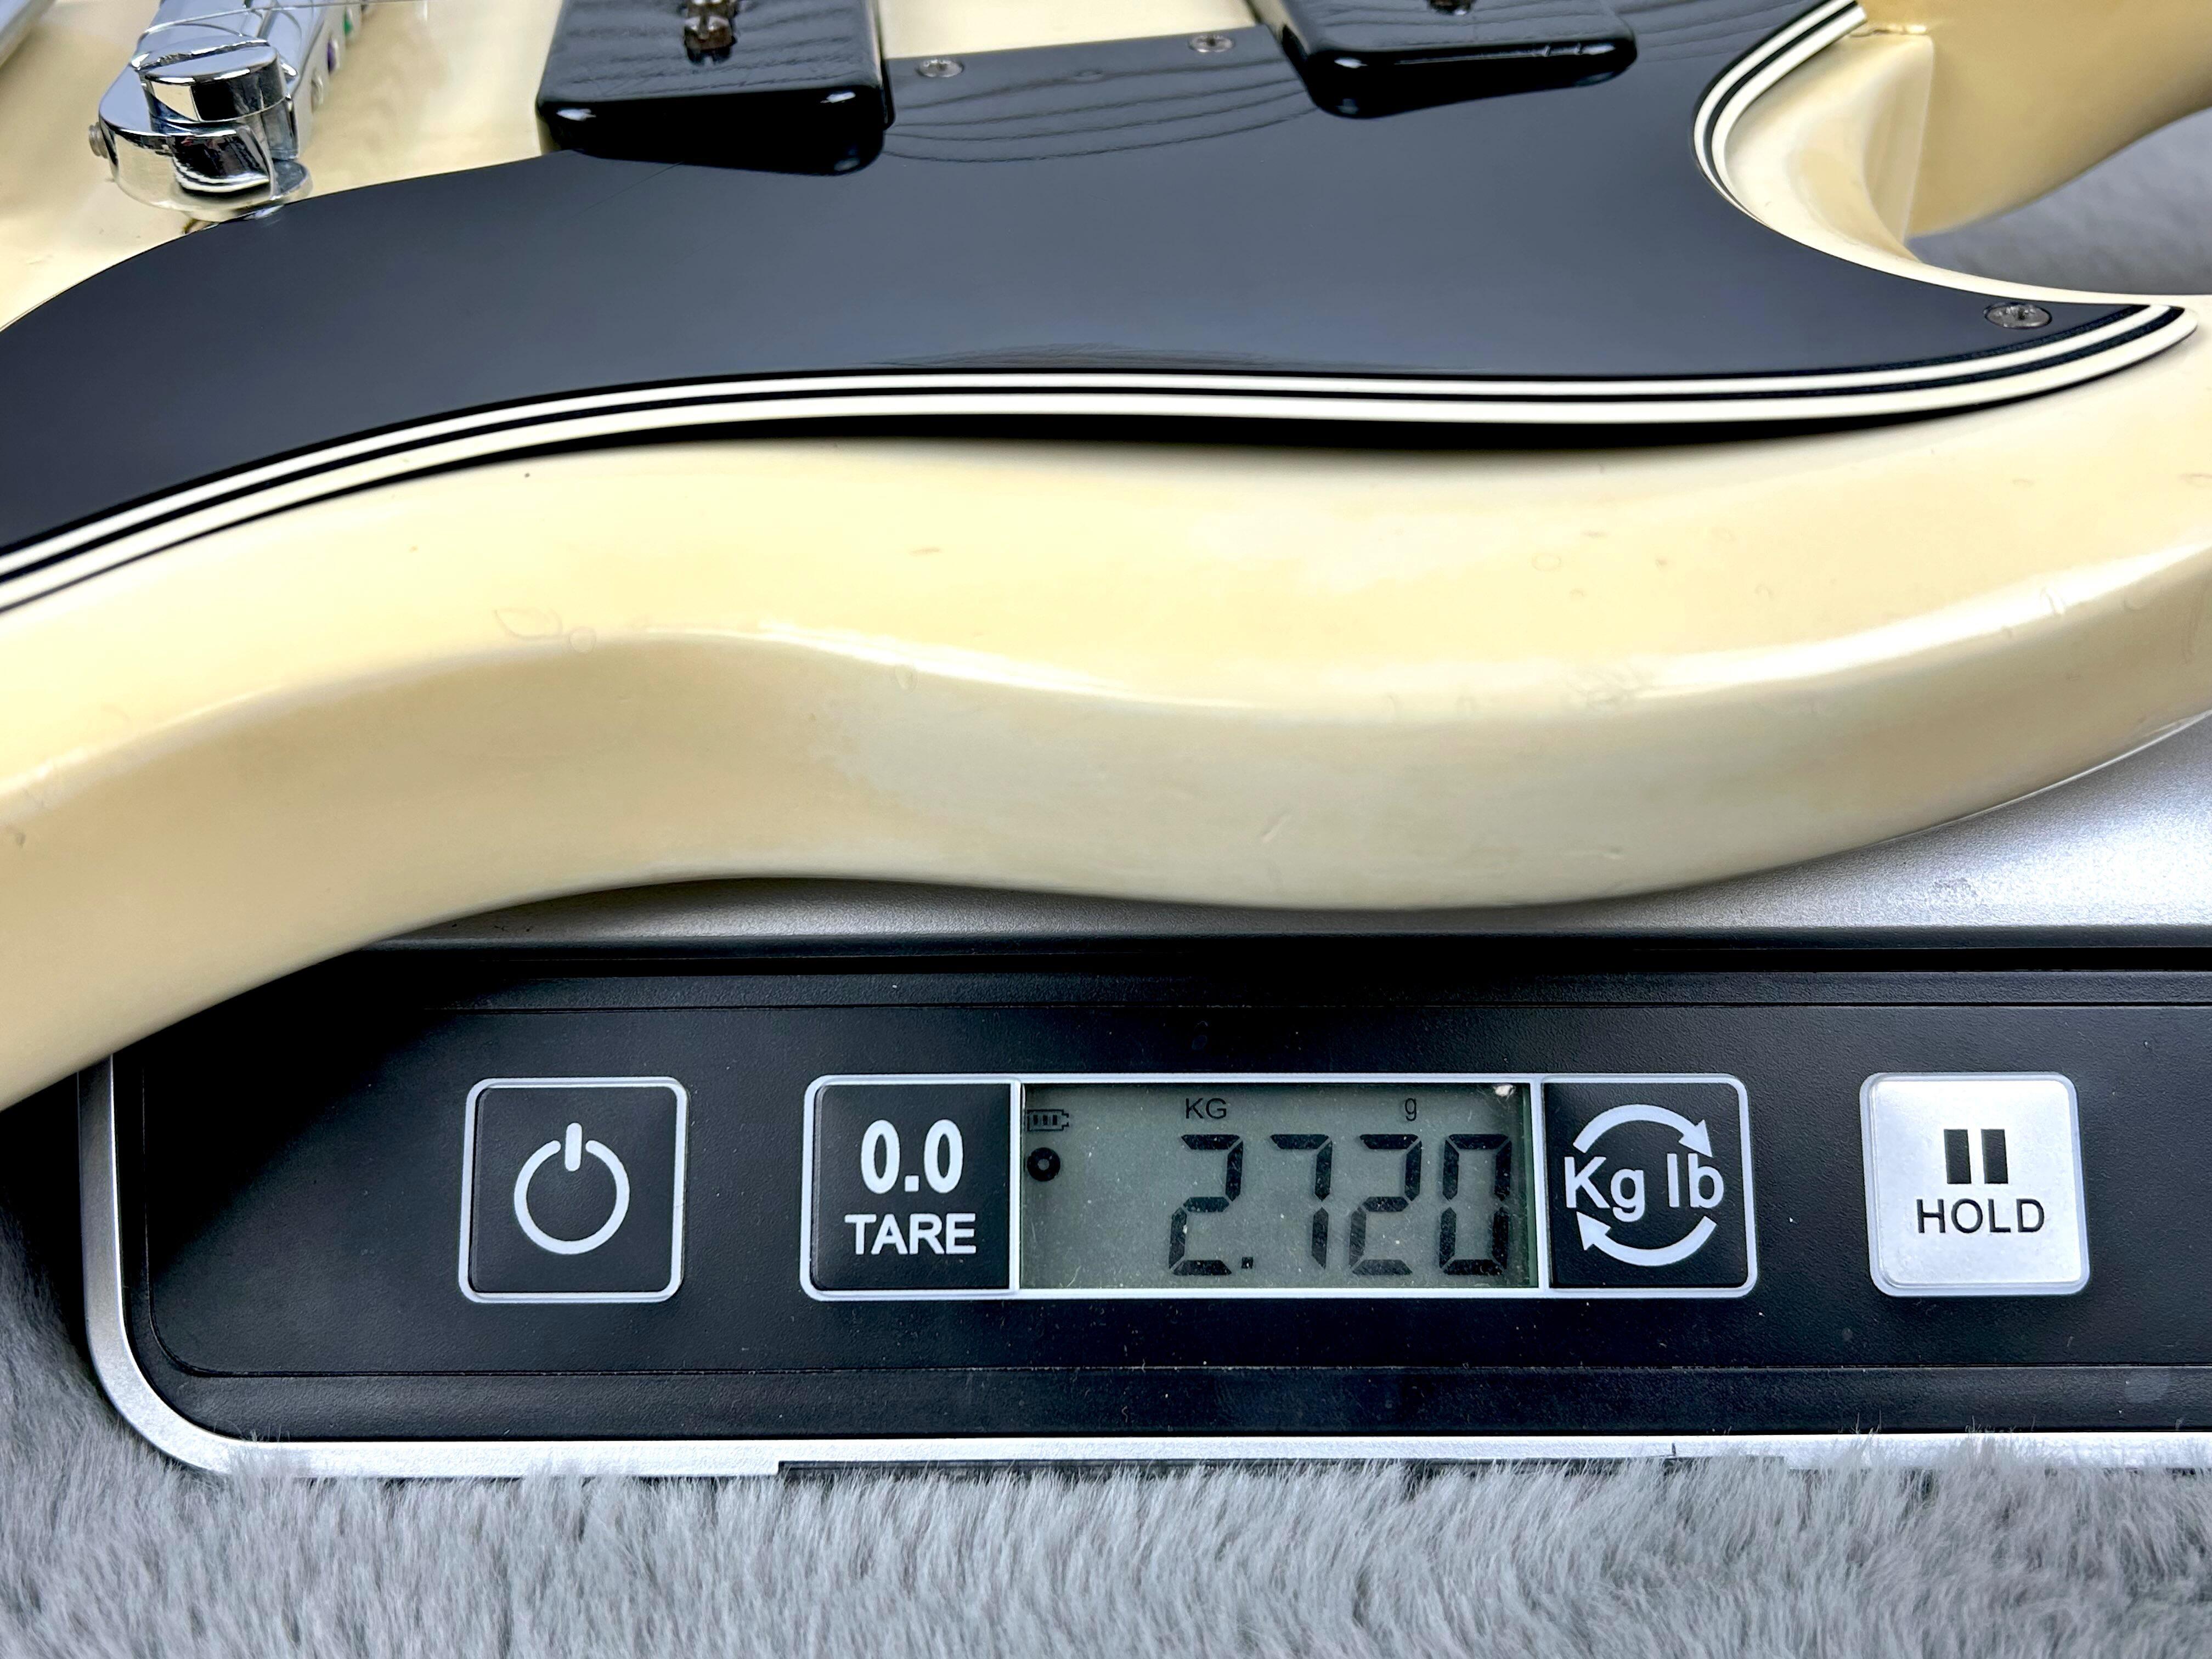 Weighing a guitar